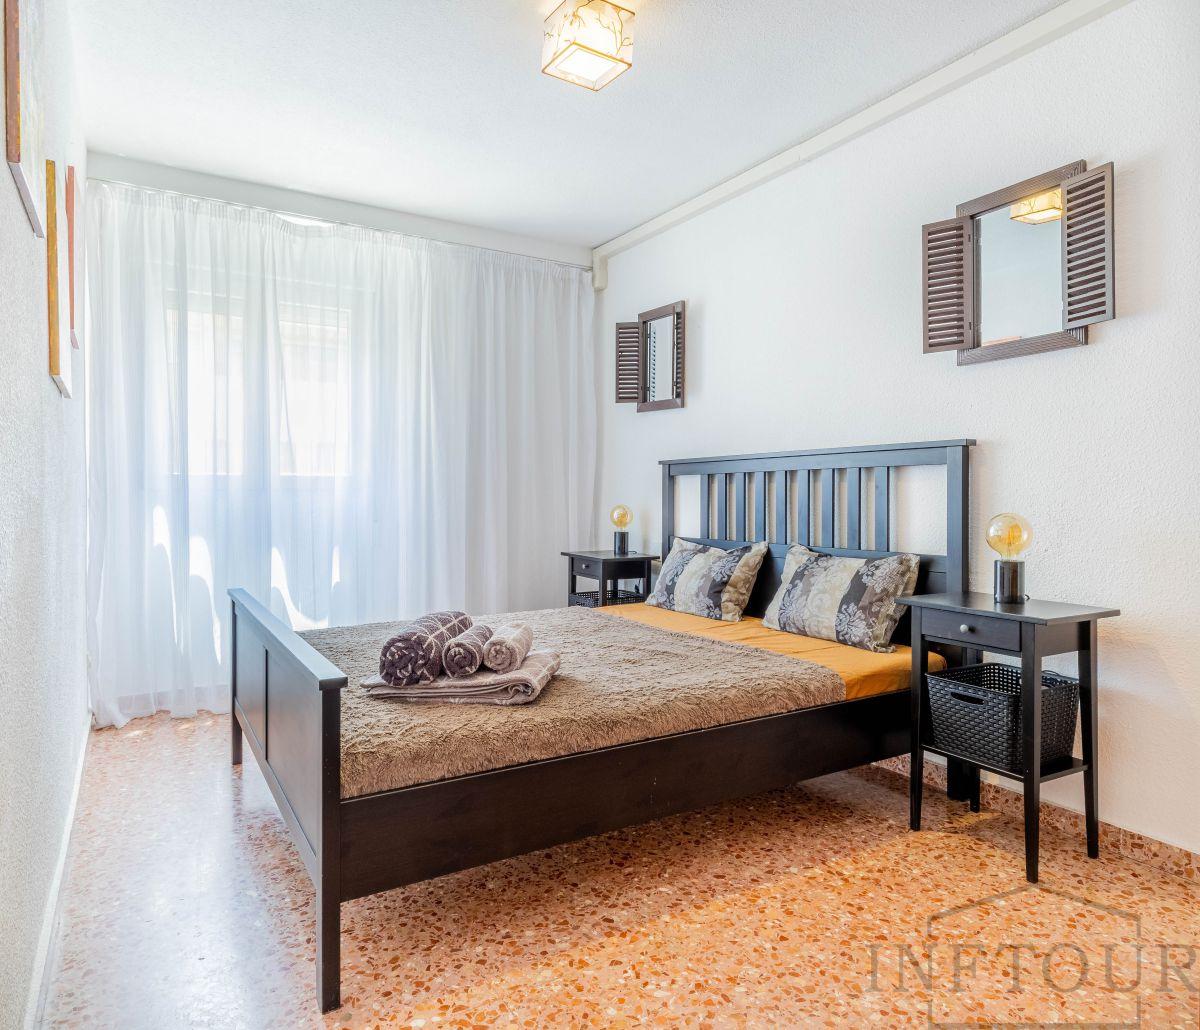 Tourist Rental 1 bedroom apartment in Apolo III, Calpe, Alicante